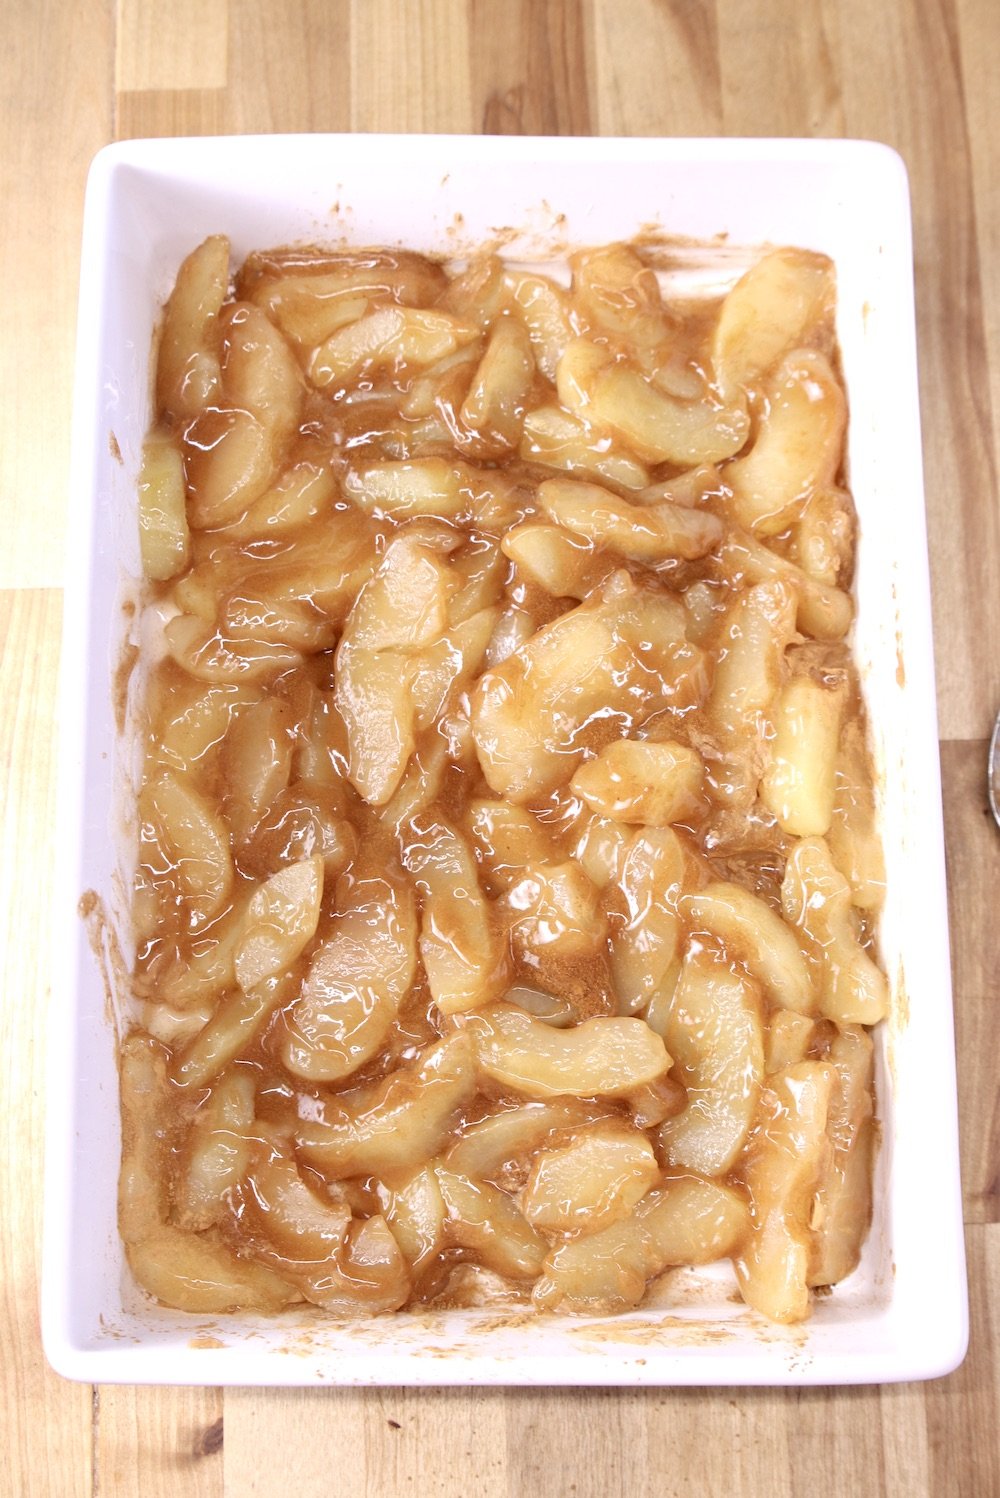 cinnamon apple pie filling in a cake pan